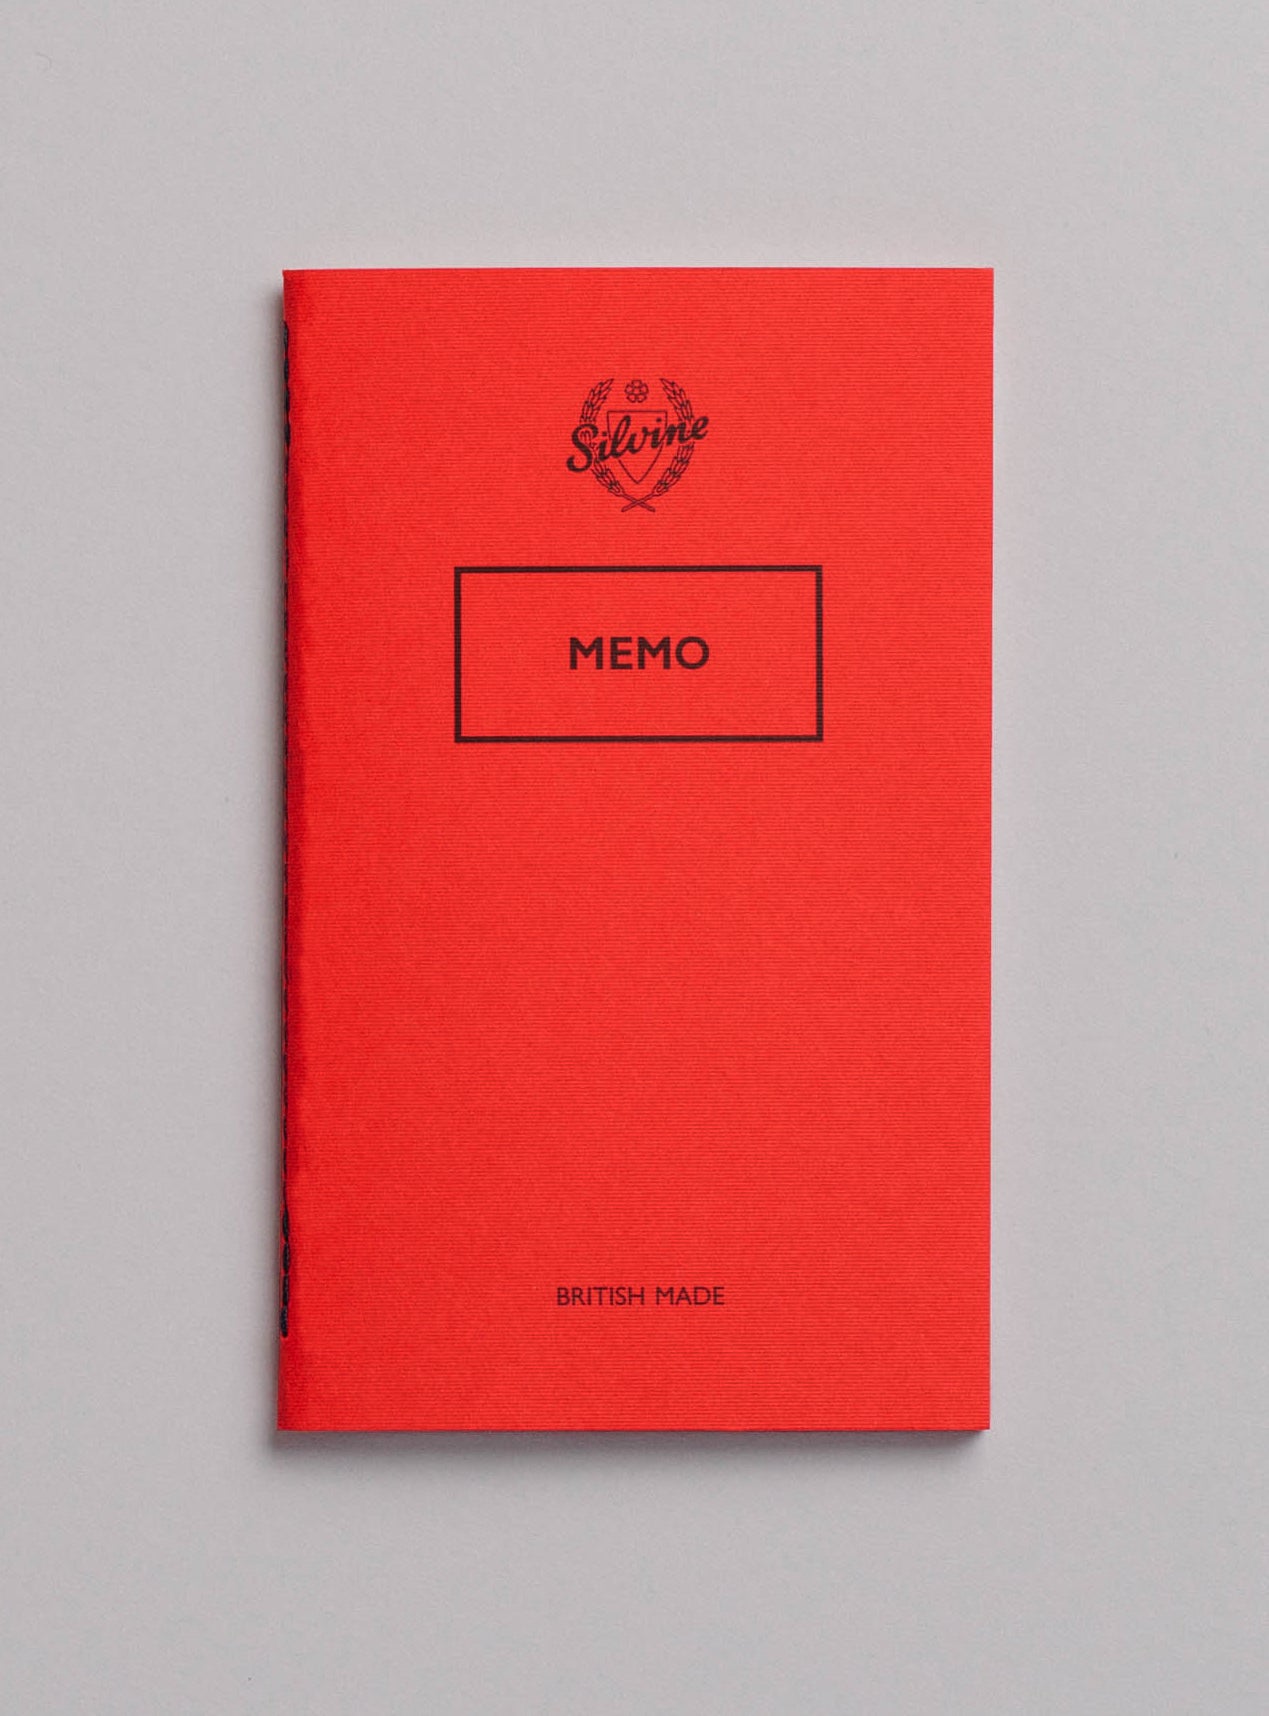 MEMO Notebook